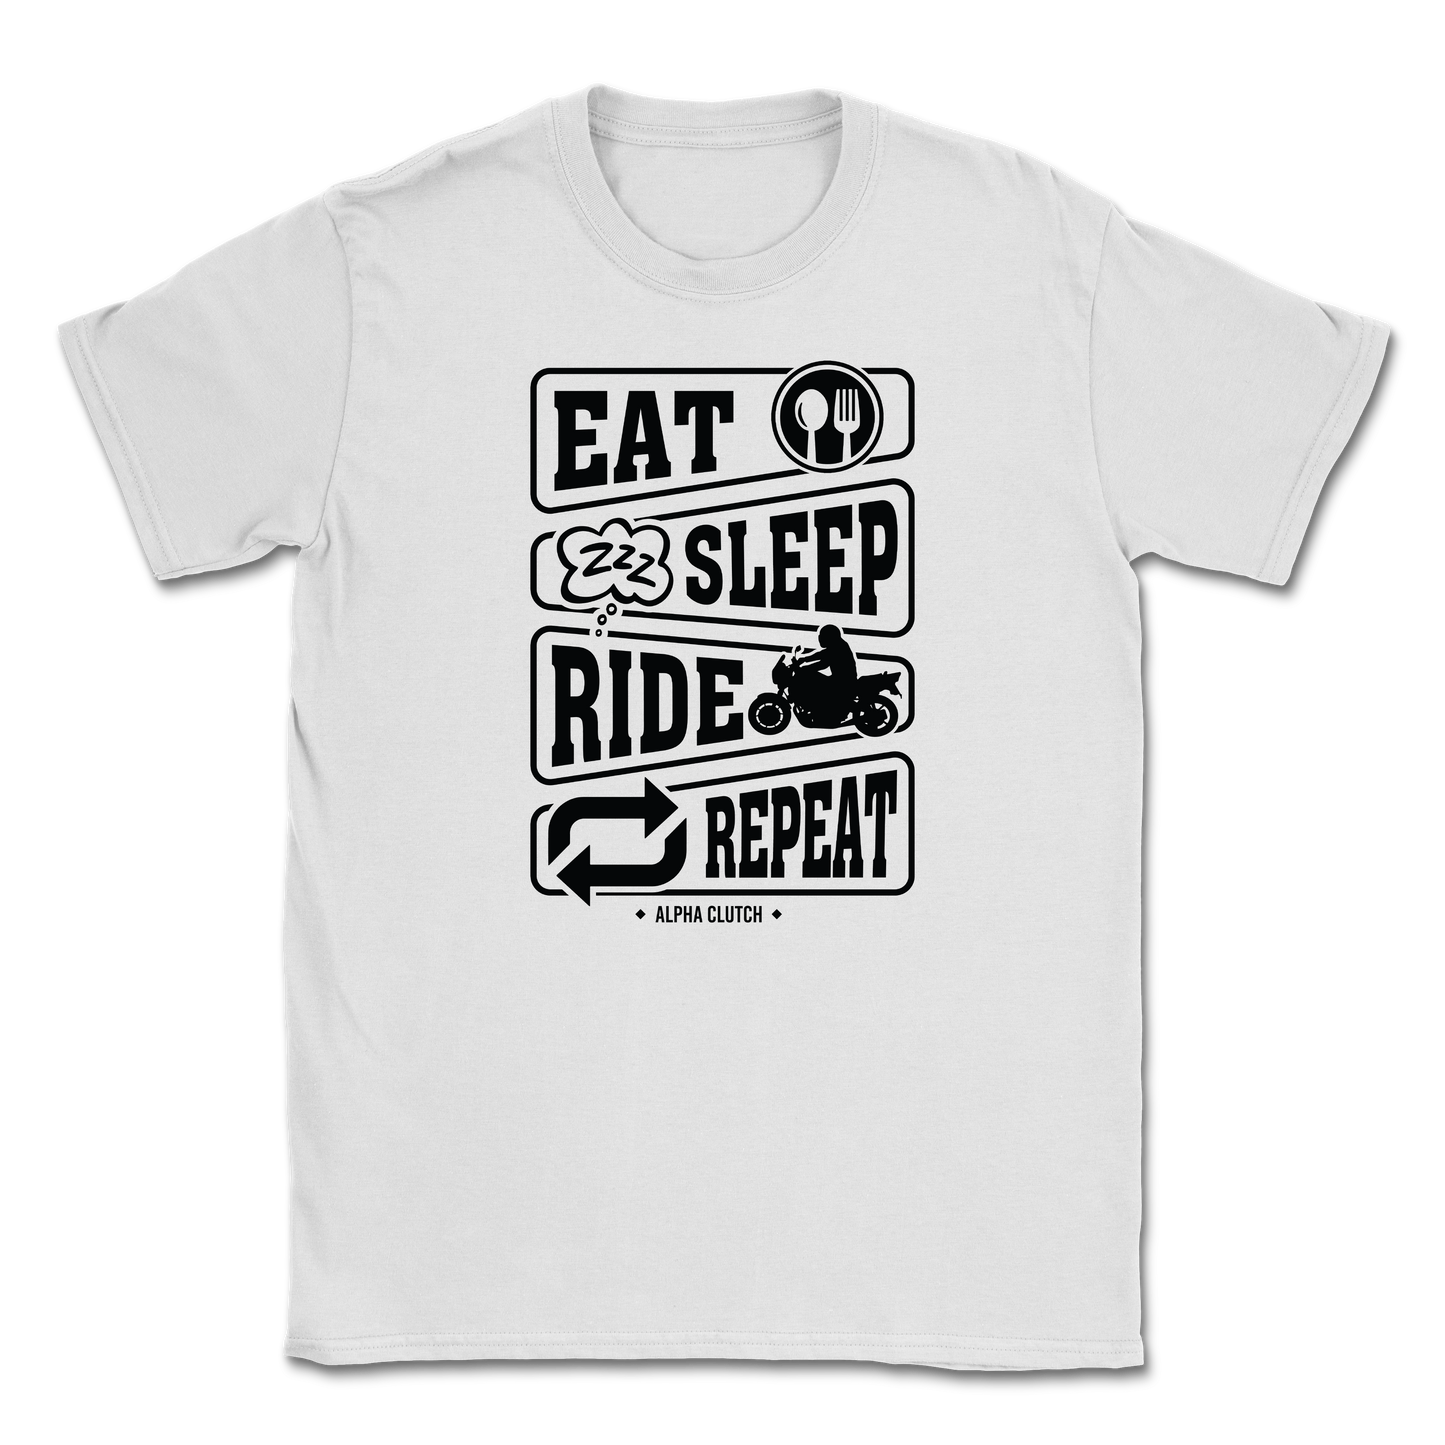 Eat Sleep Ride T-Shirt